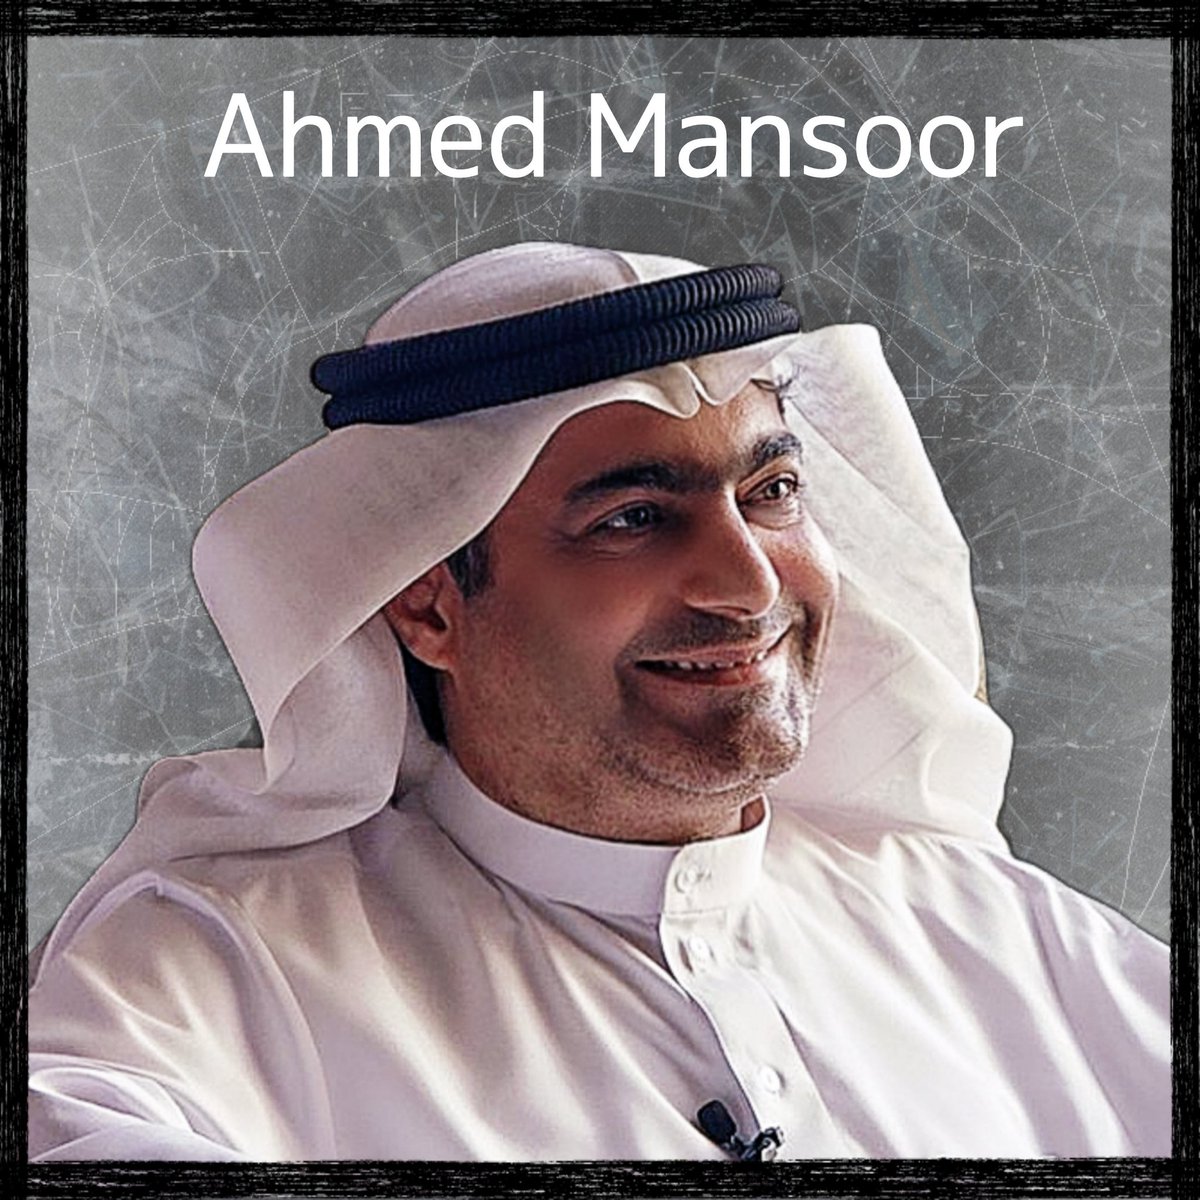 @Sam_hanryon @amnestypresse #أحمد_منصور
#AhmedMansoor
#FreeAhmed
#FreeMansoor